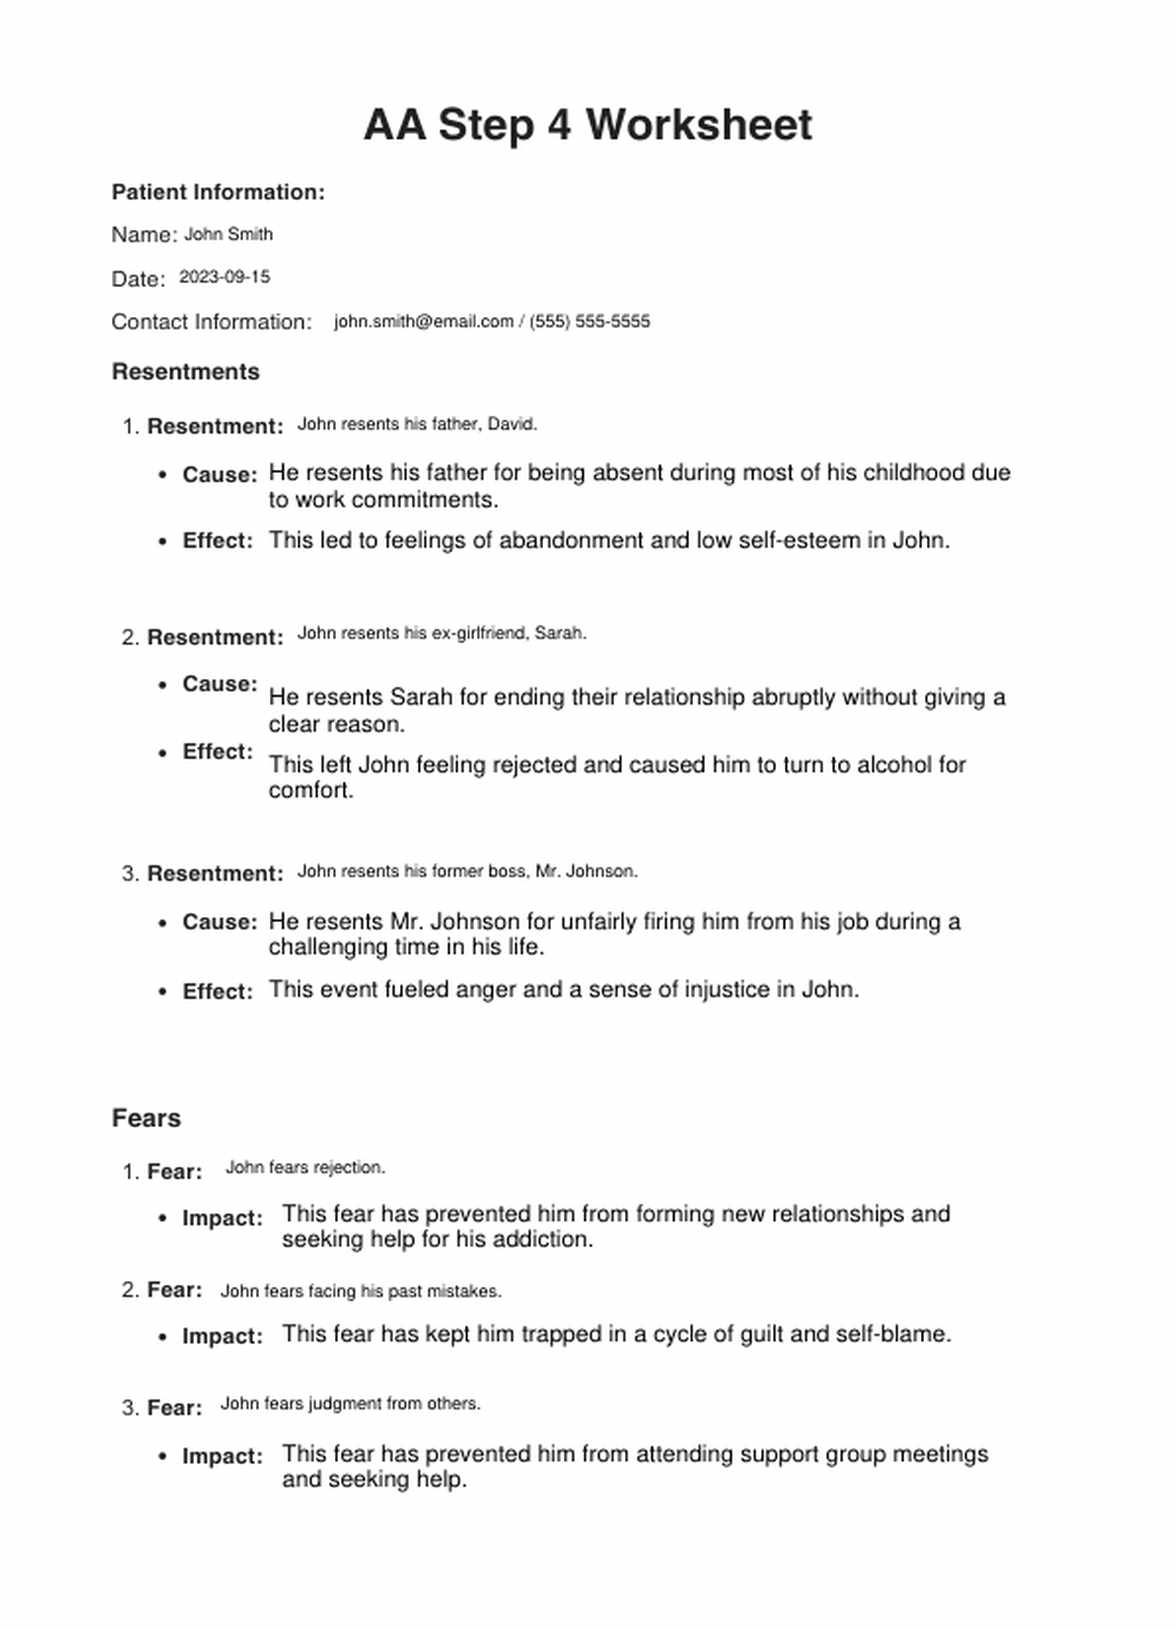 AA Step 4 Worksheets PDF Example